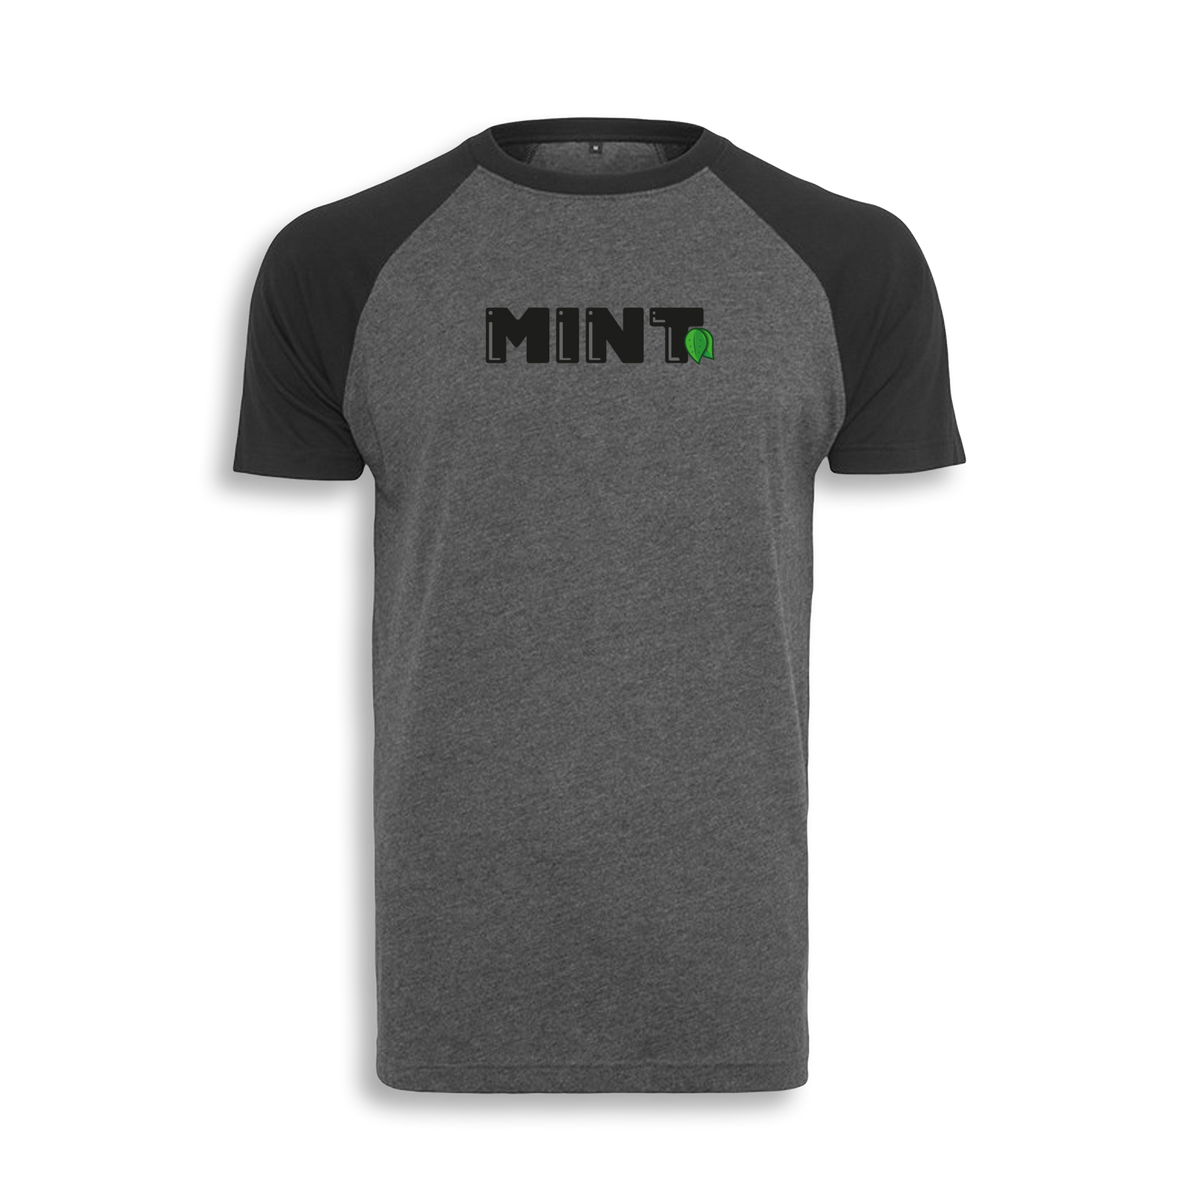 Raglan MINT - BeeManc T-Shirt - Charcoal/Black